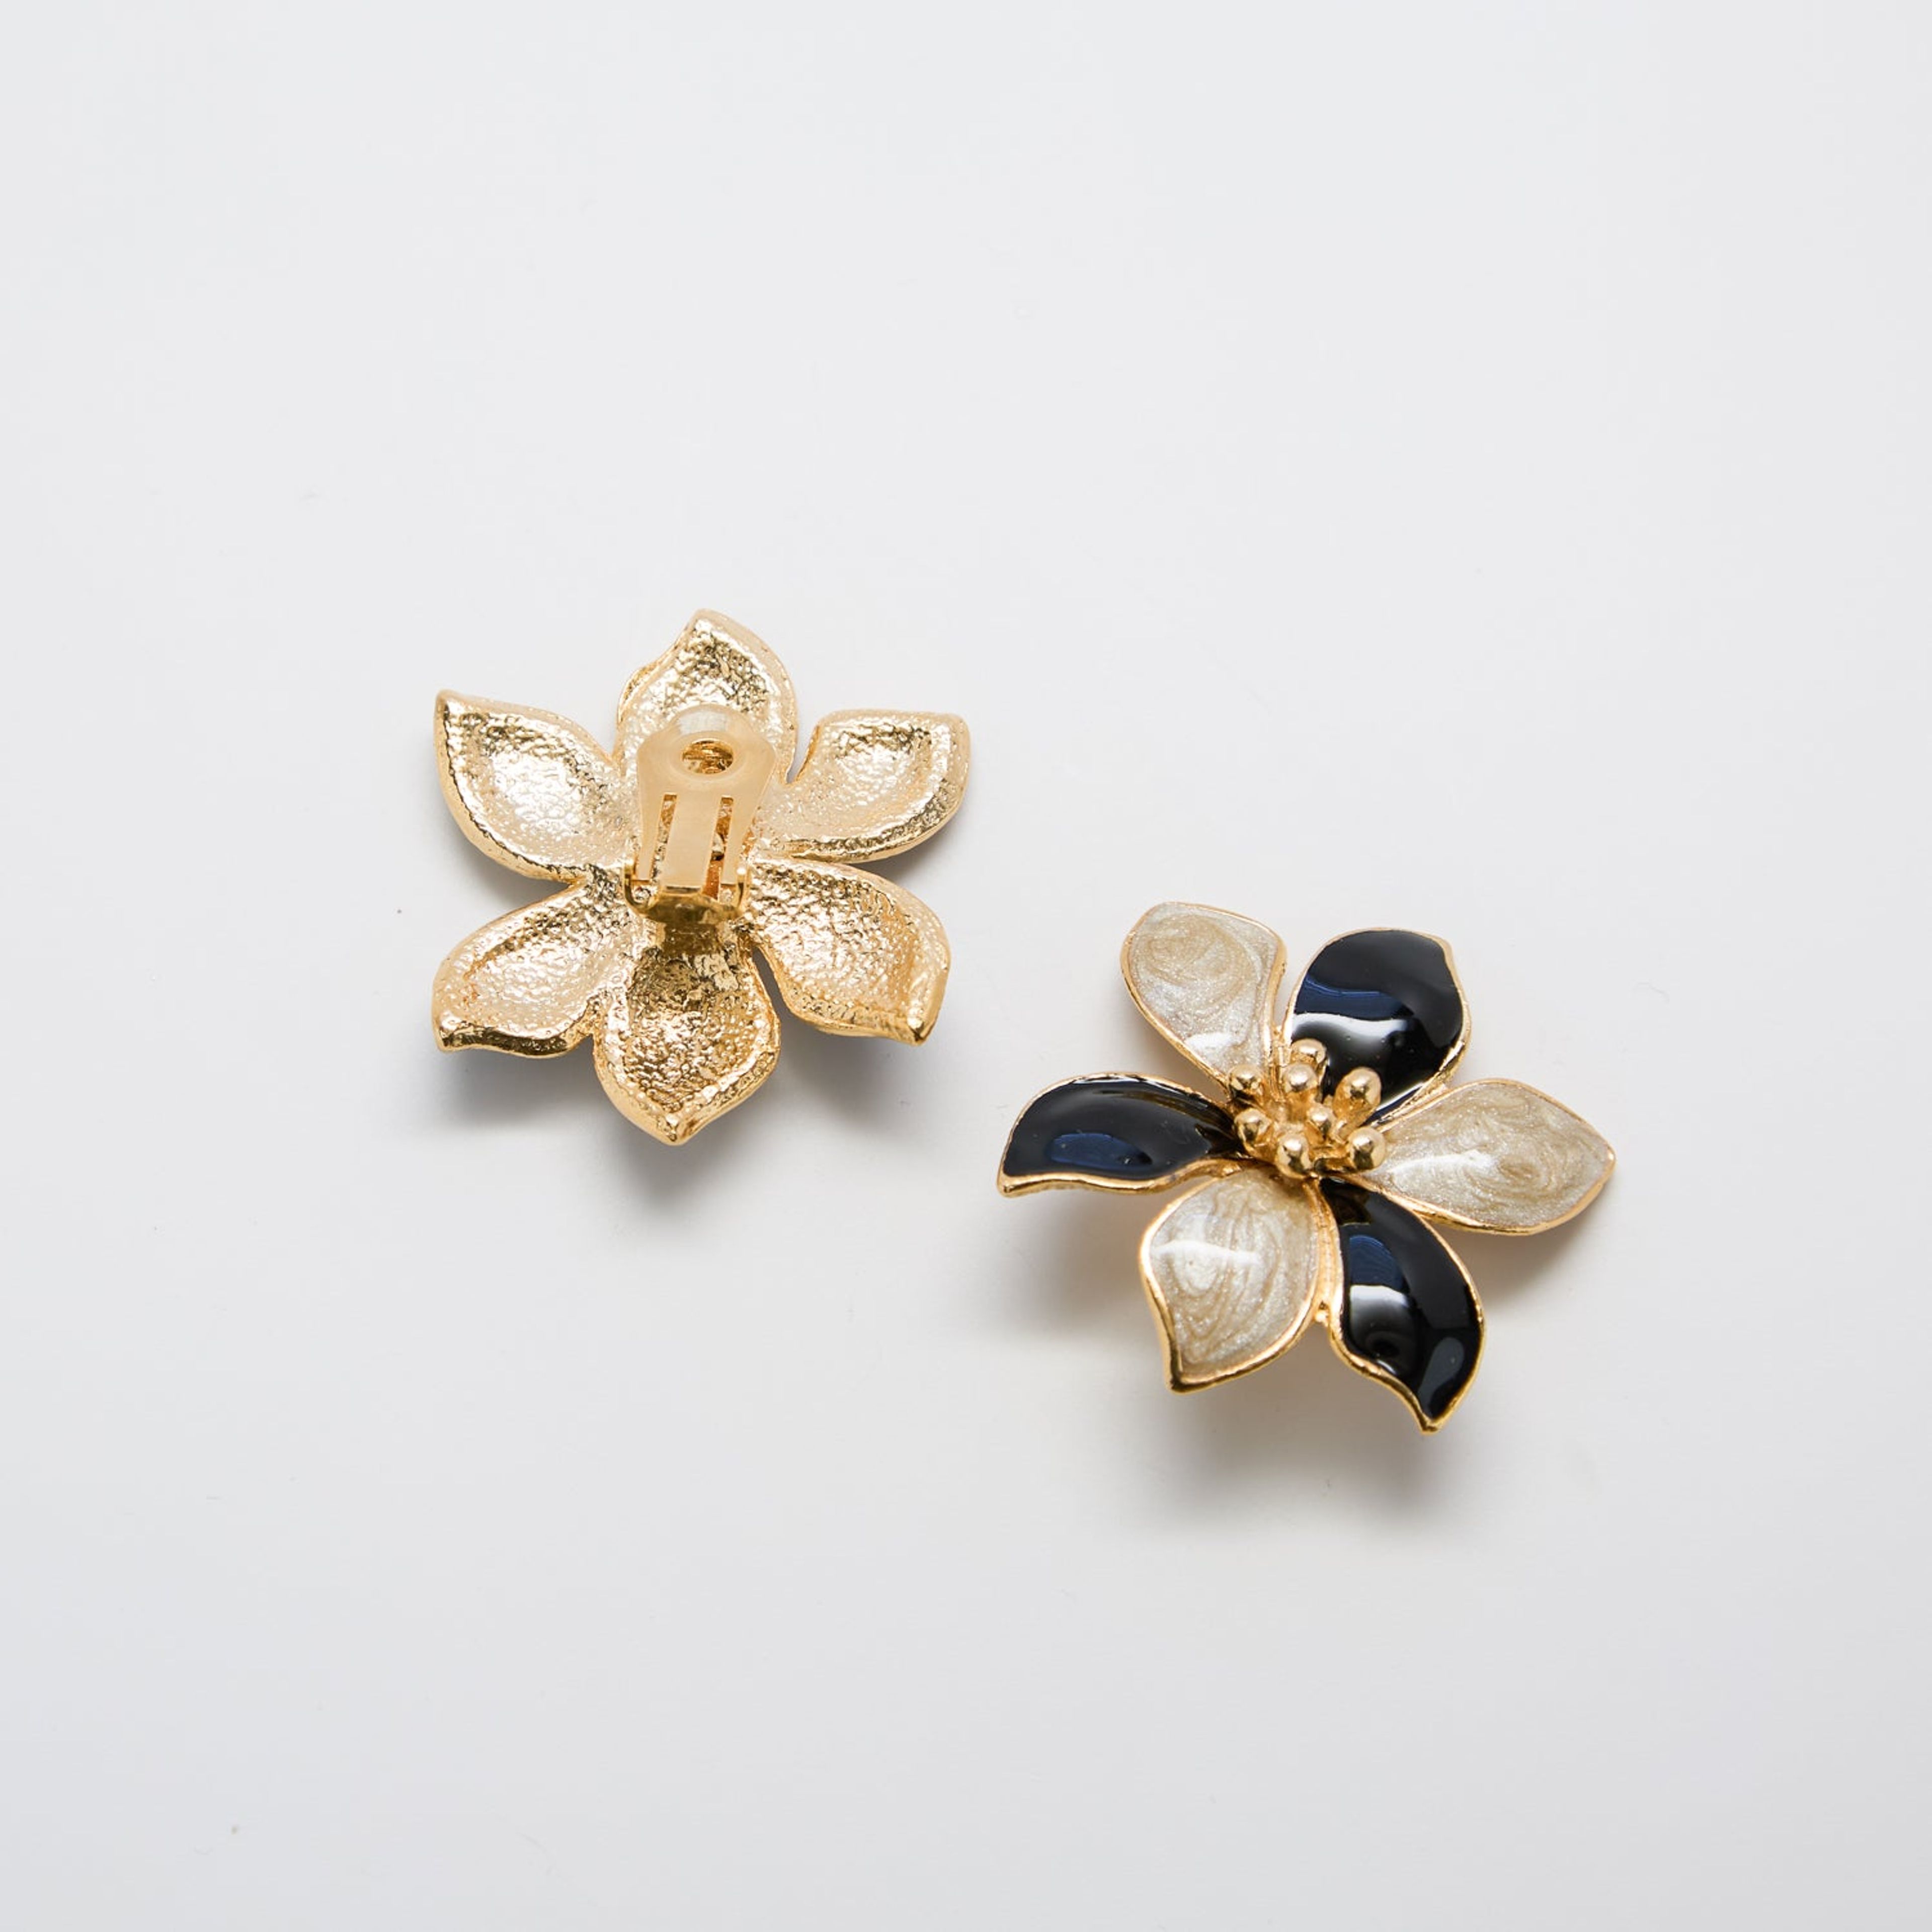 Vintage Black and White Flower Earrings